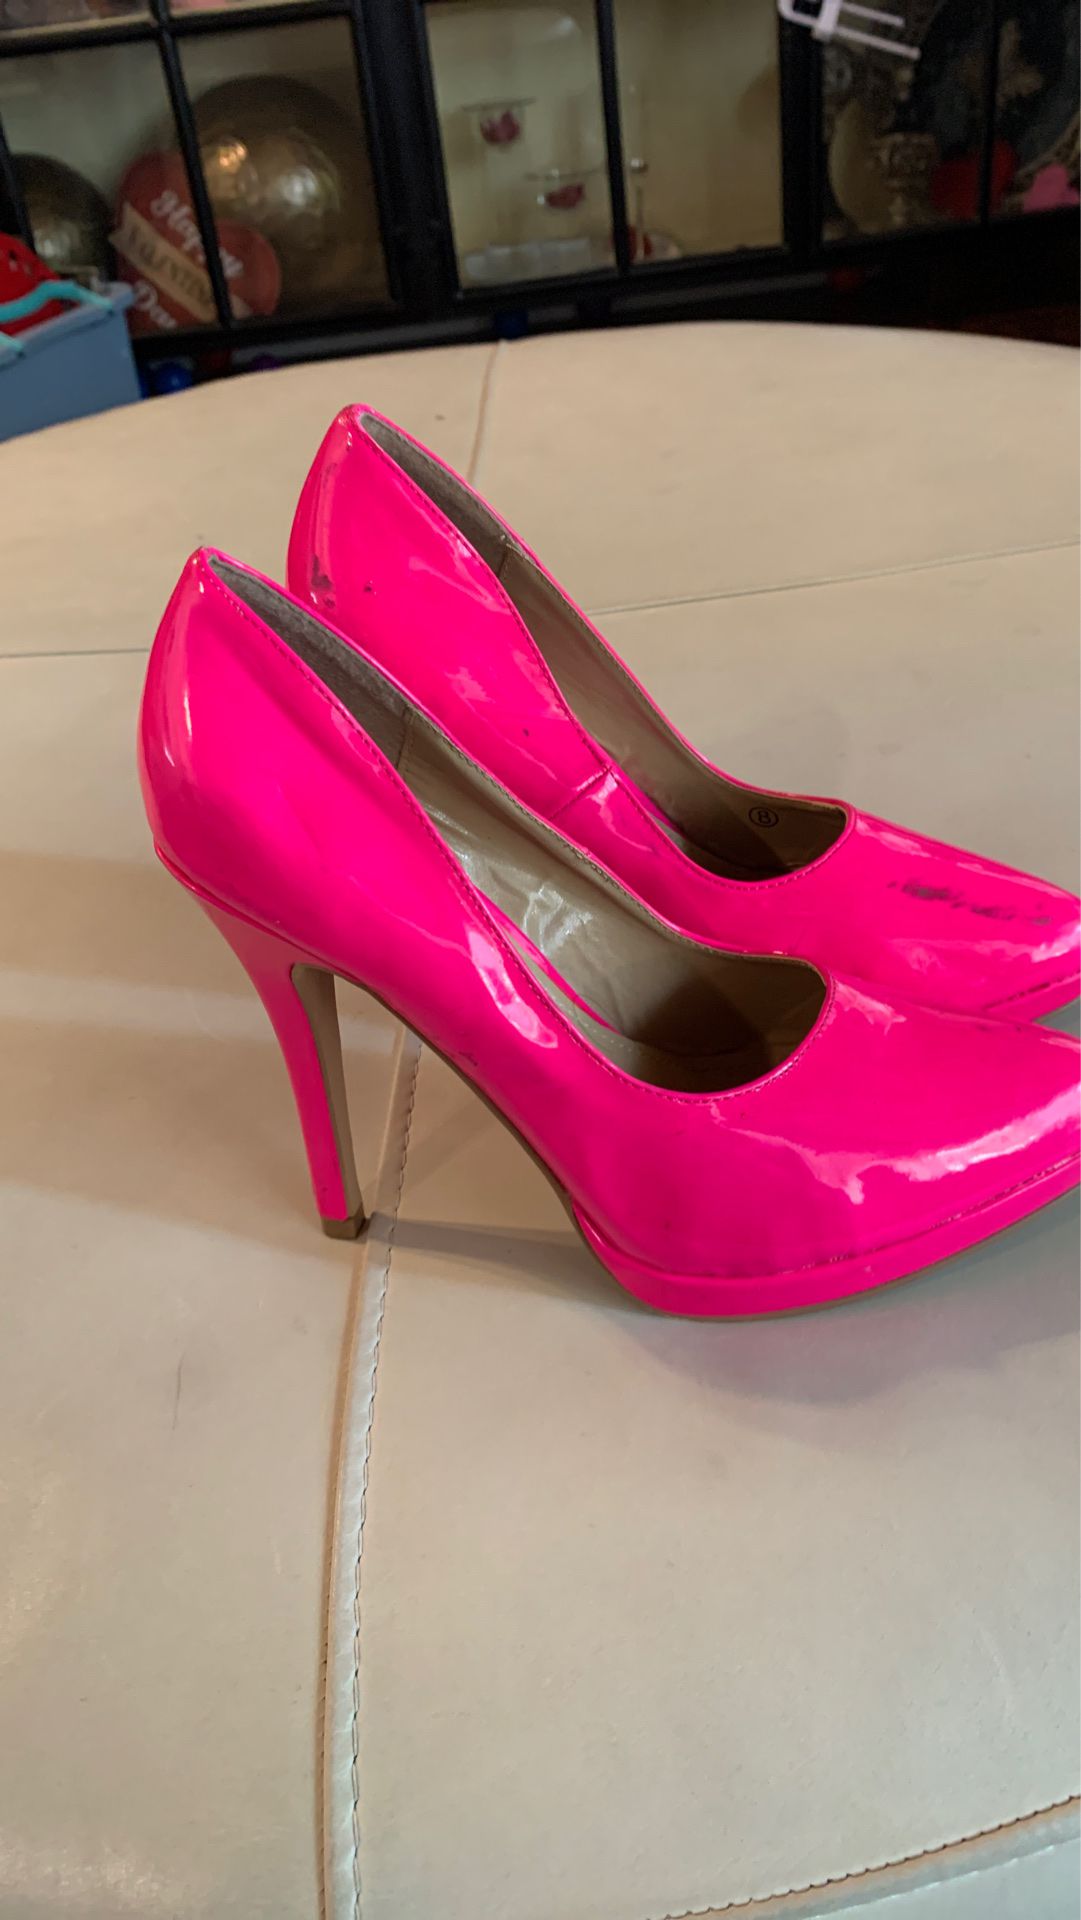 Zapato dama size 8.5 solo 3 dólares